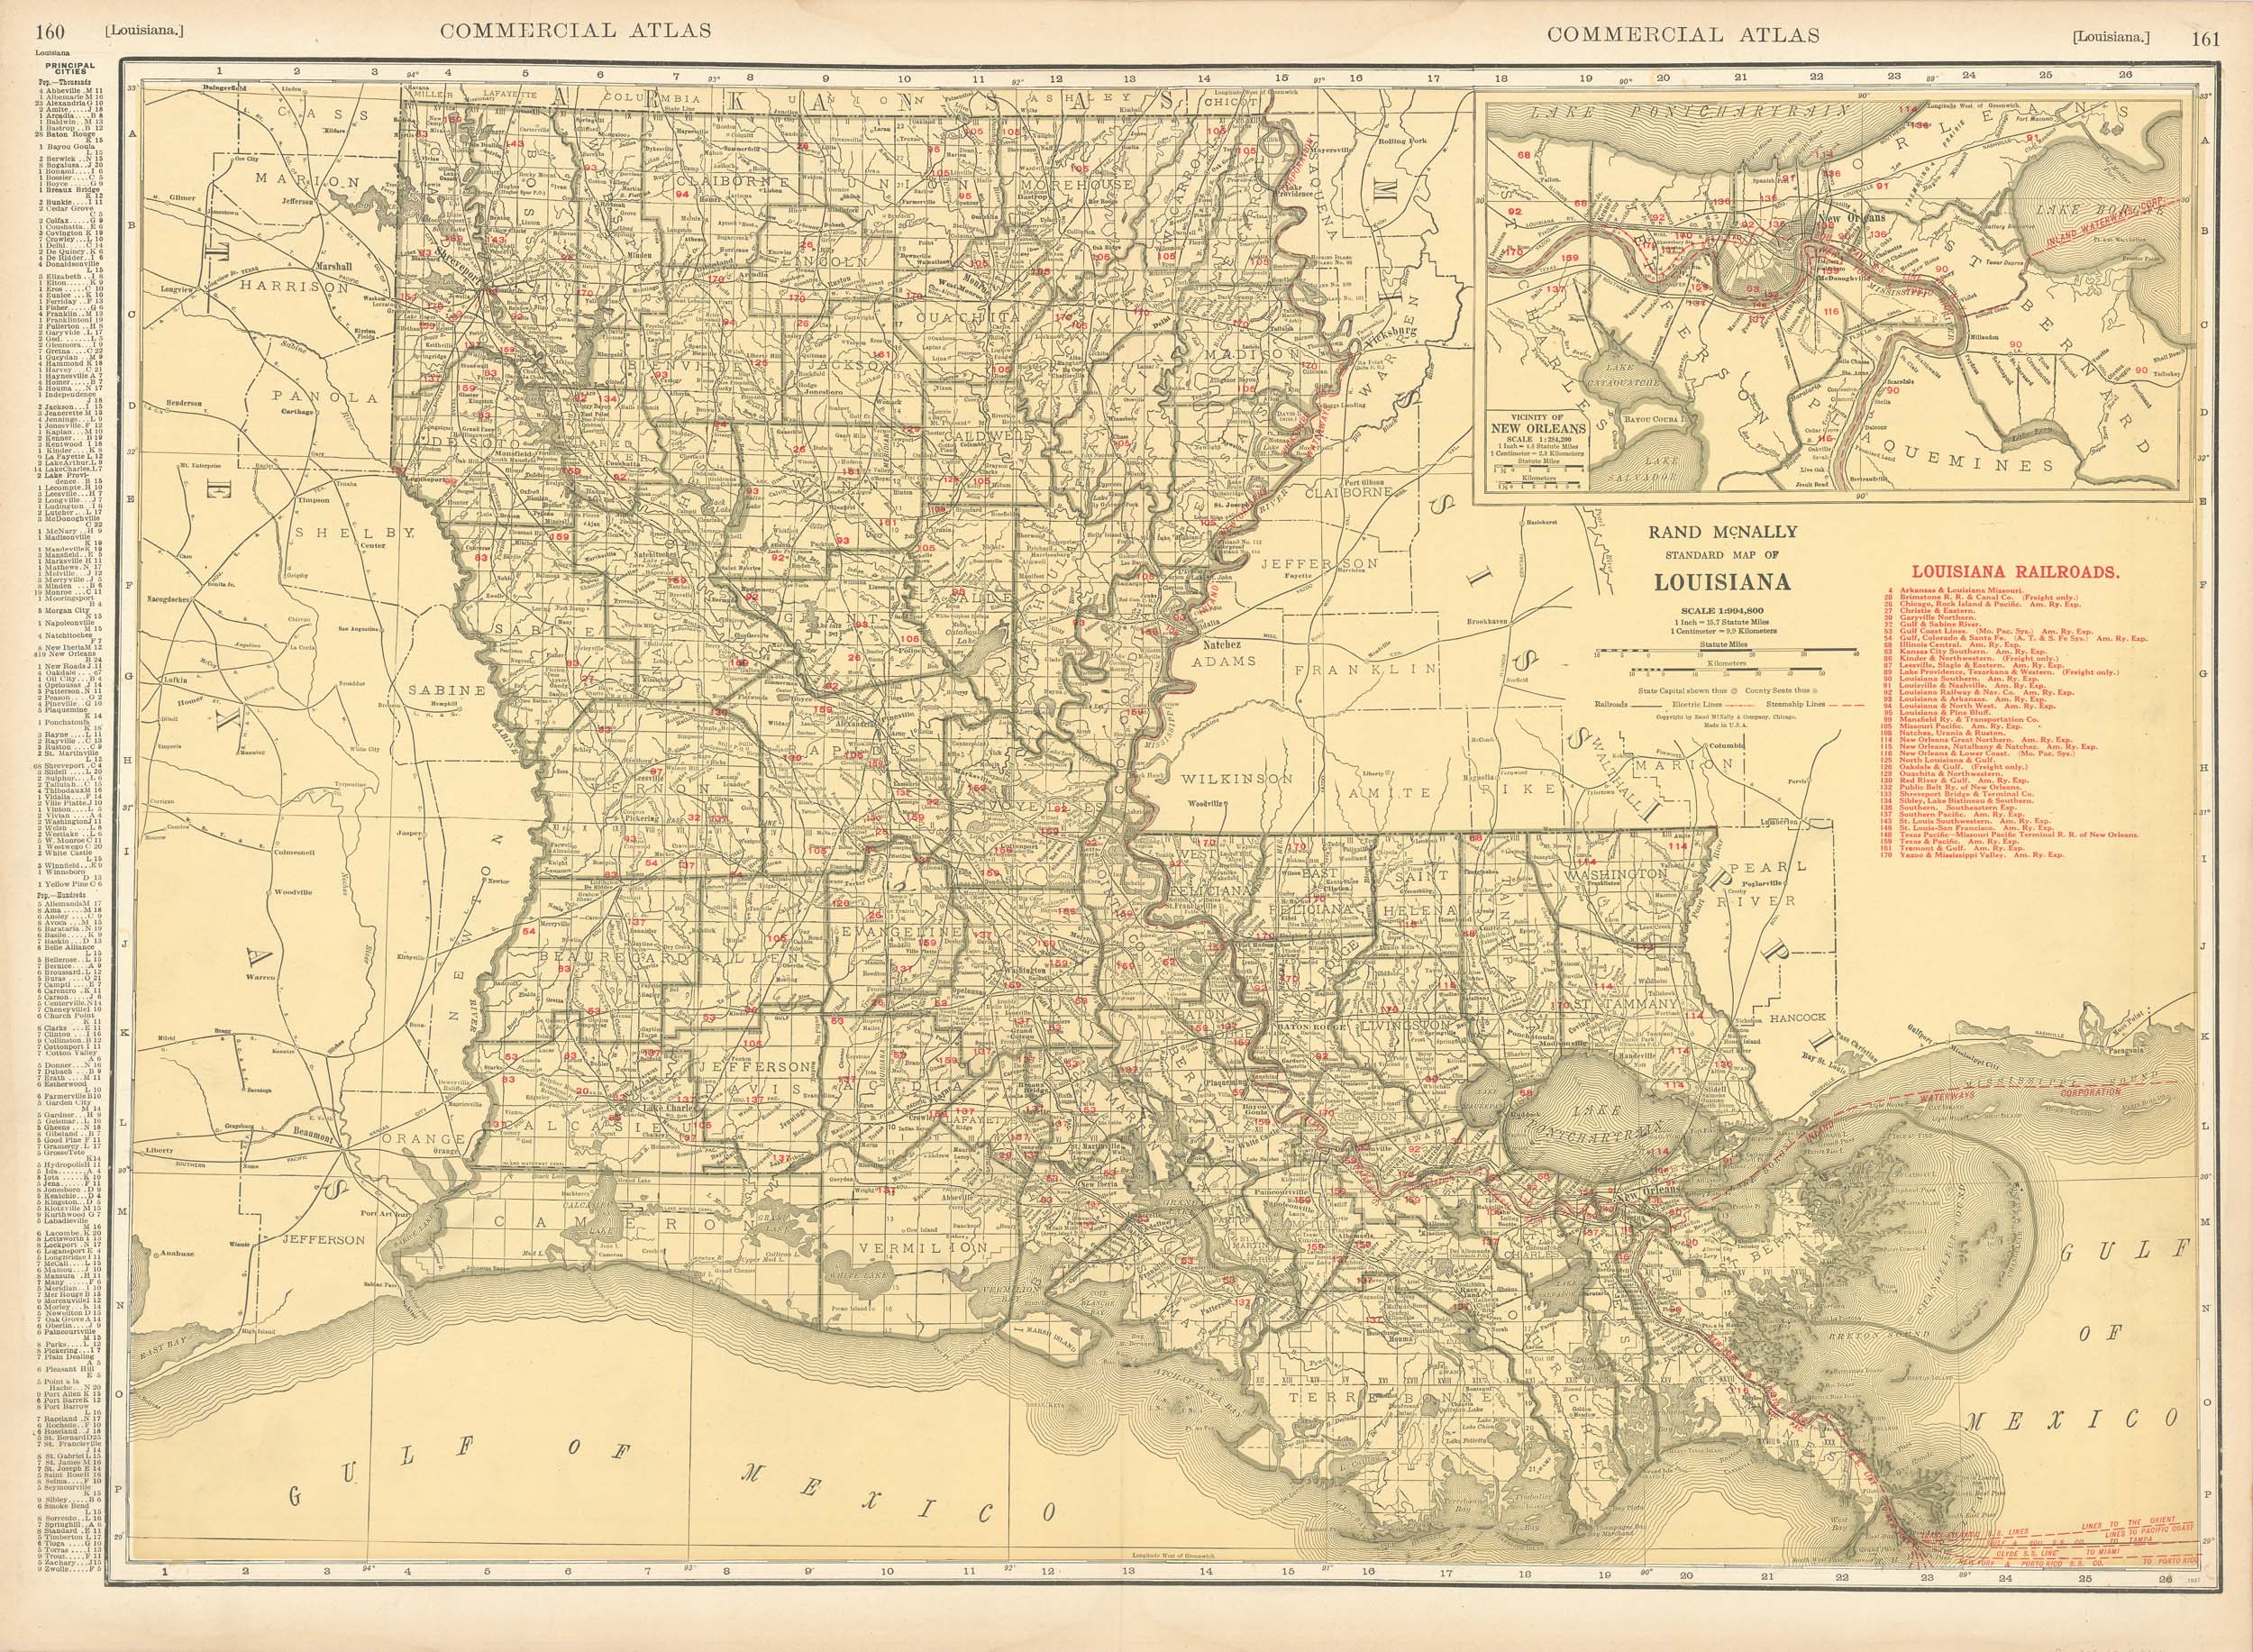 Map of Louisiana - Art Source International